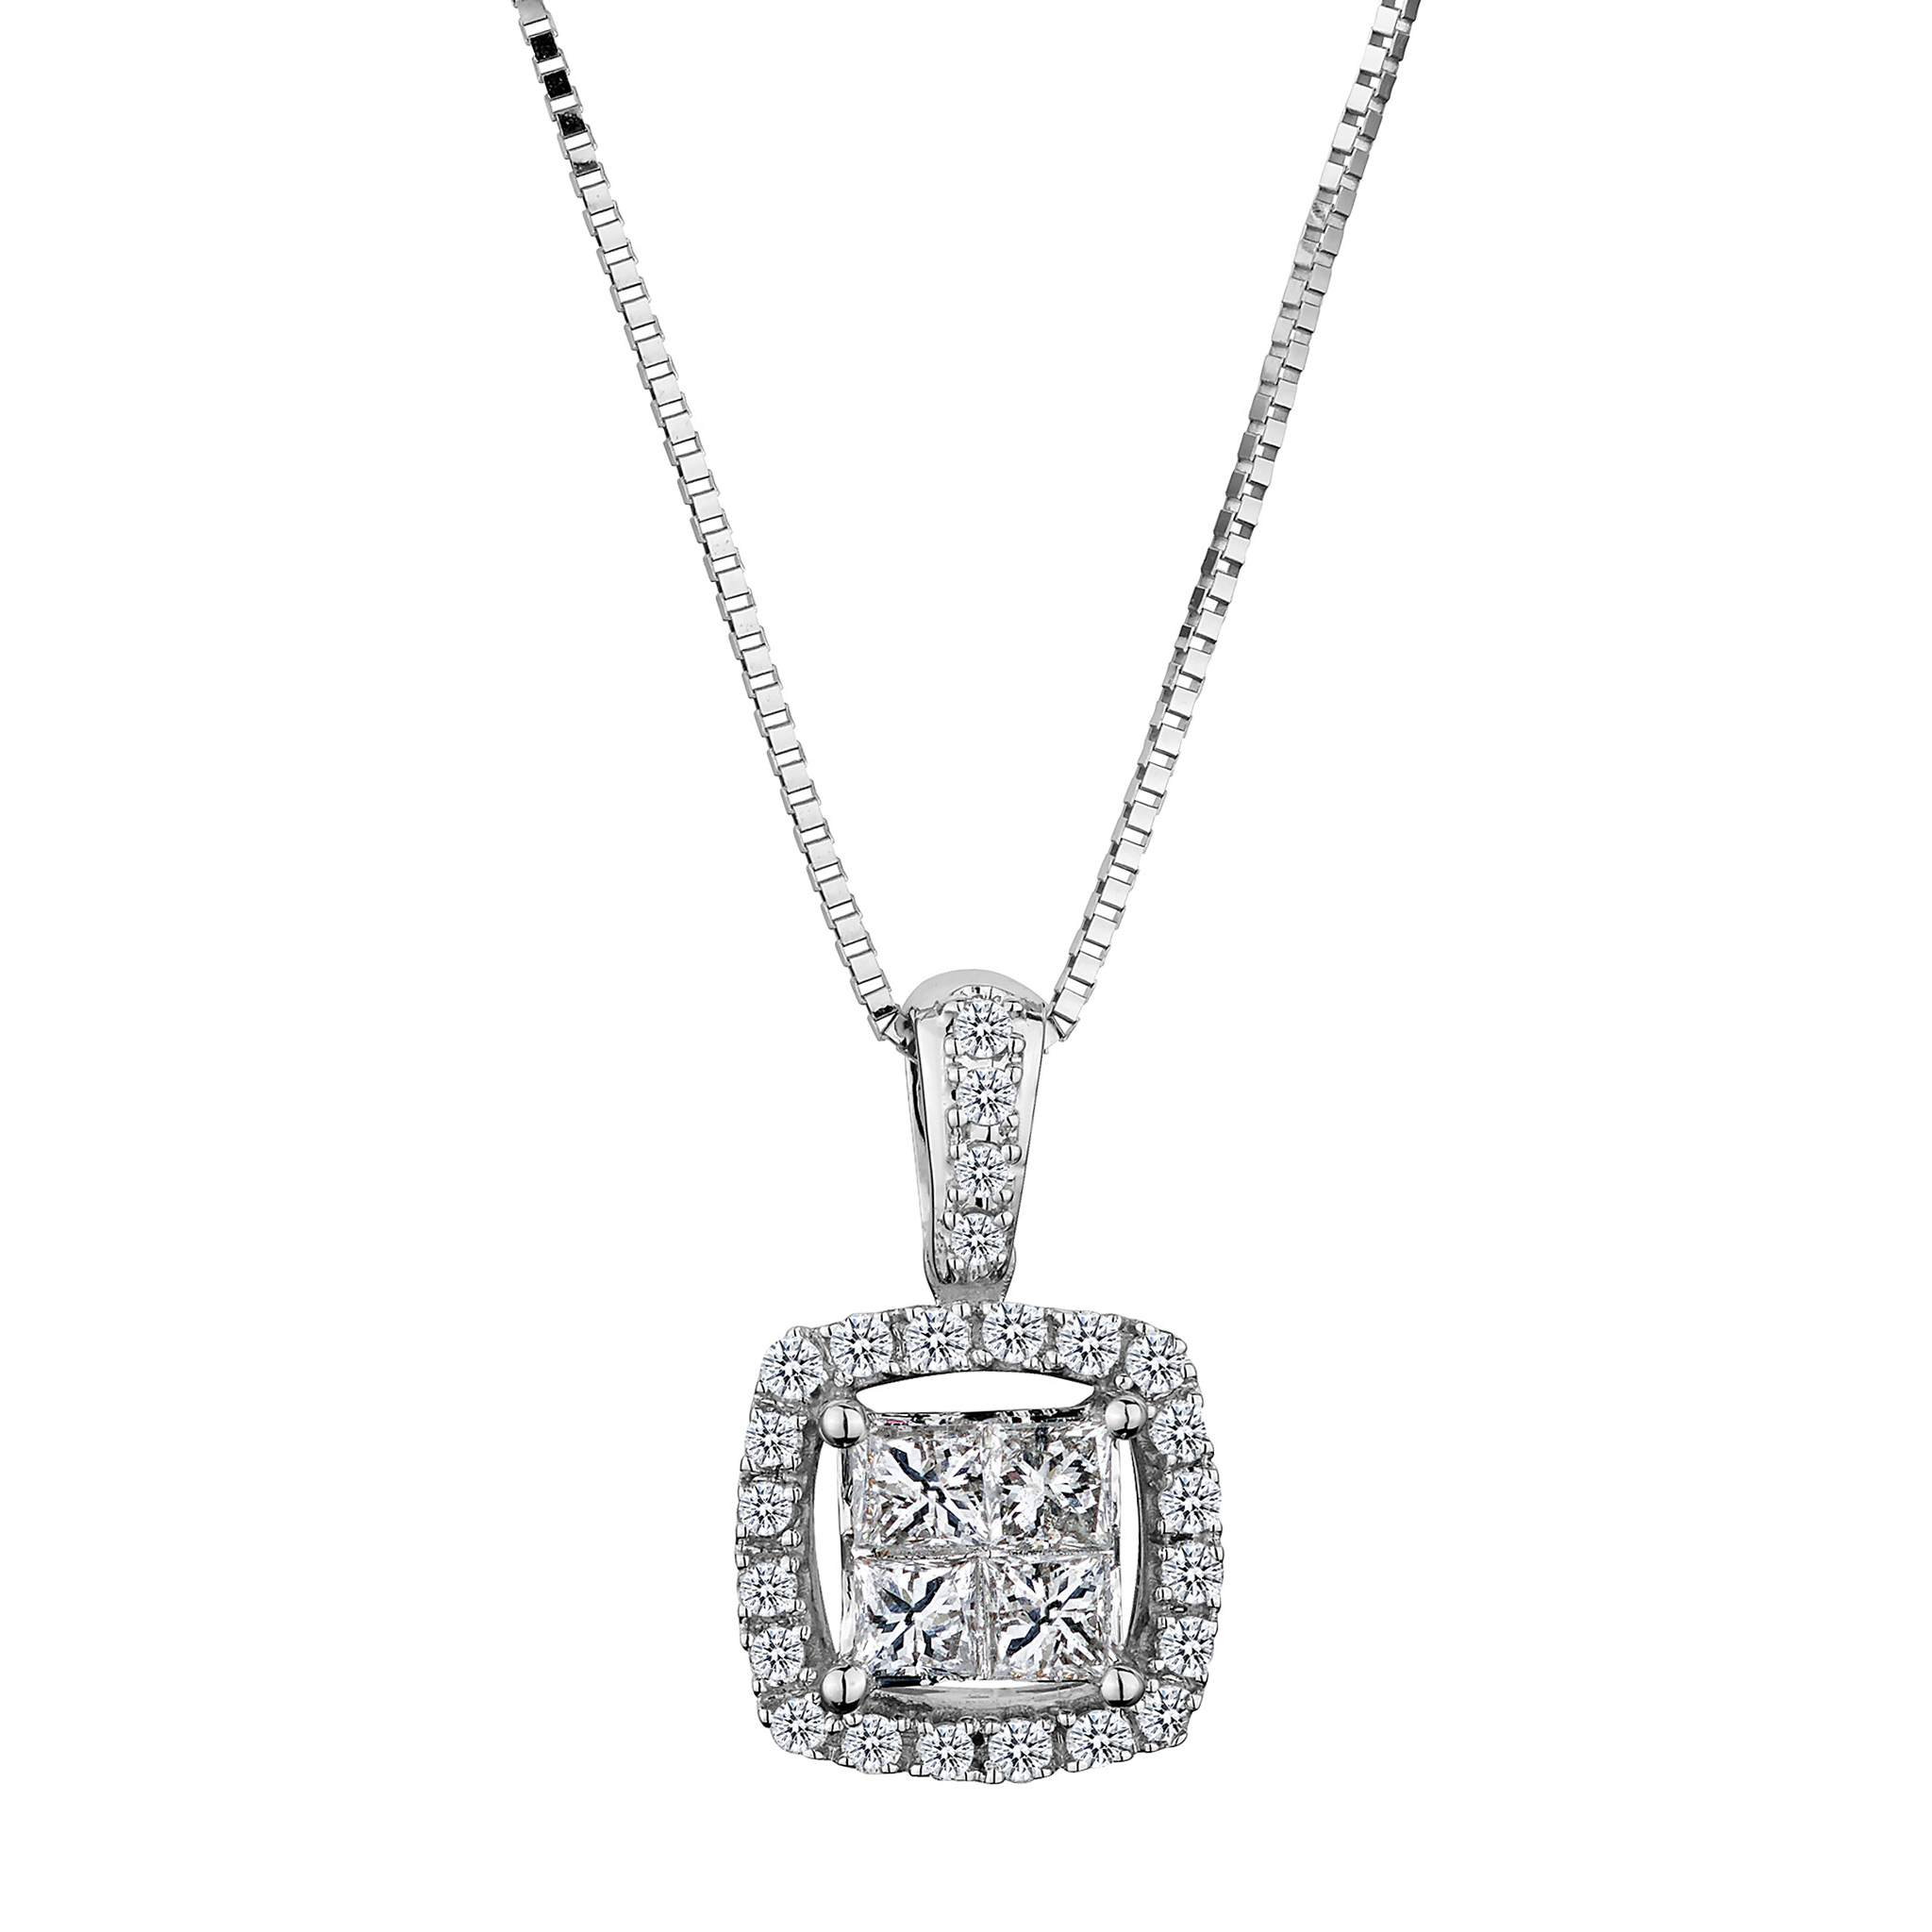 .33 Carat Diamond Pendant,  10kt White Gold. Necklaces and Pendants. Griffin Jewellery Designs. 